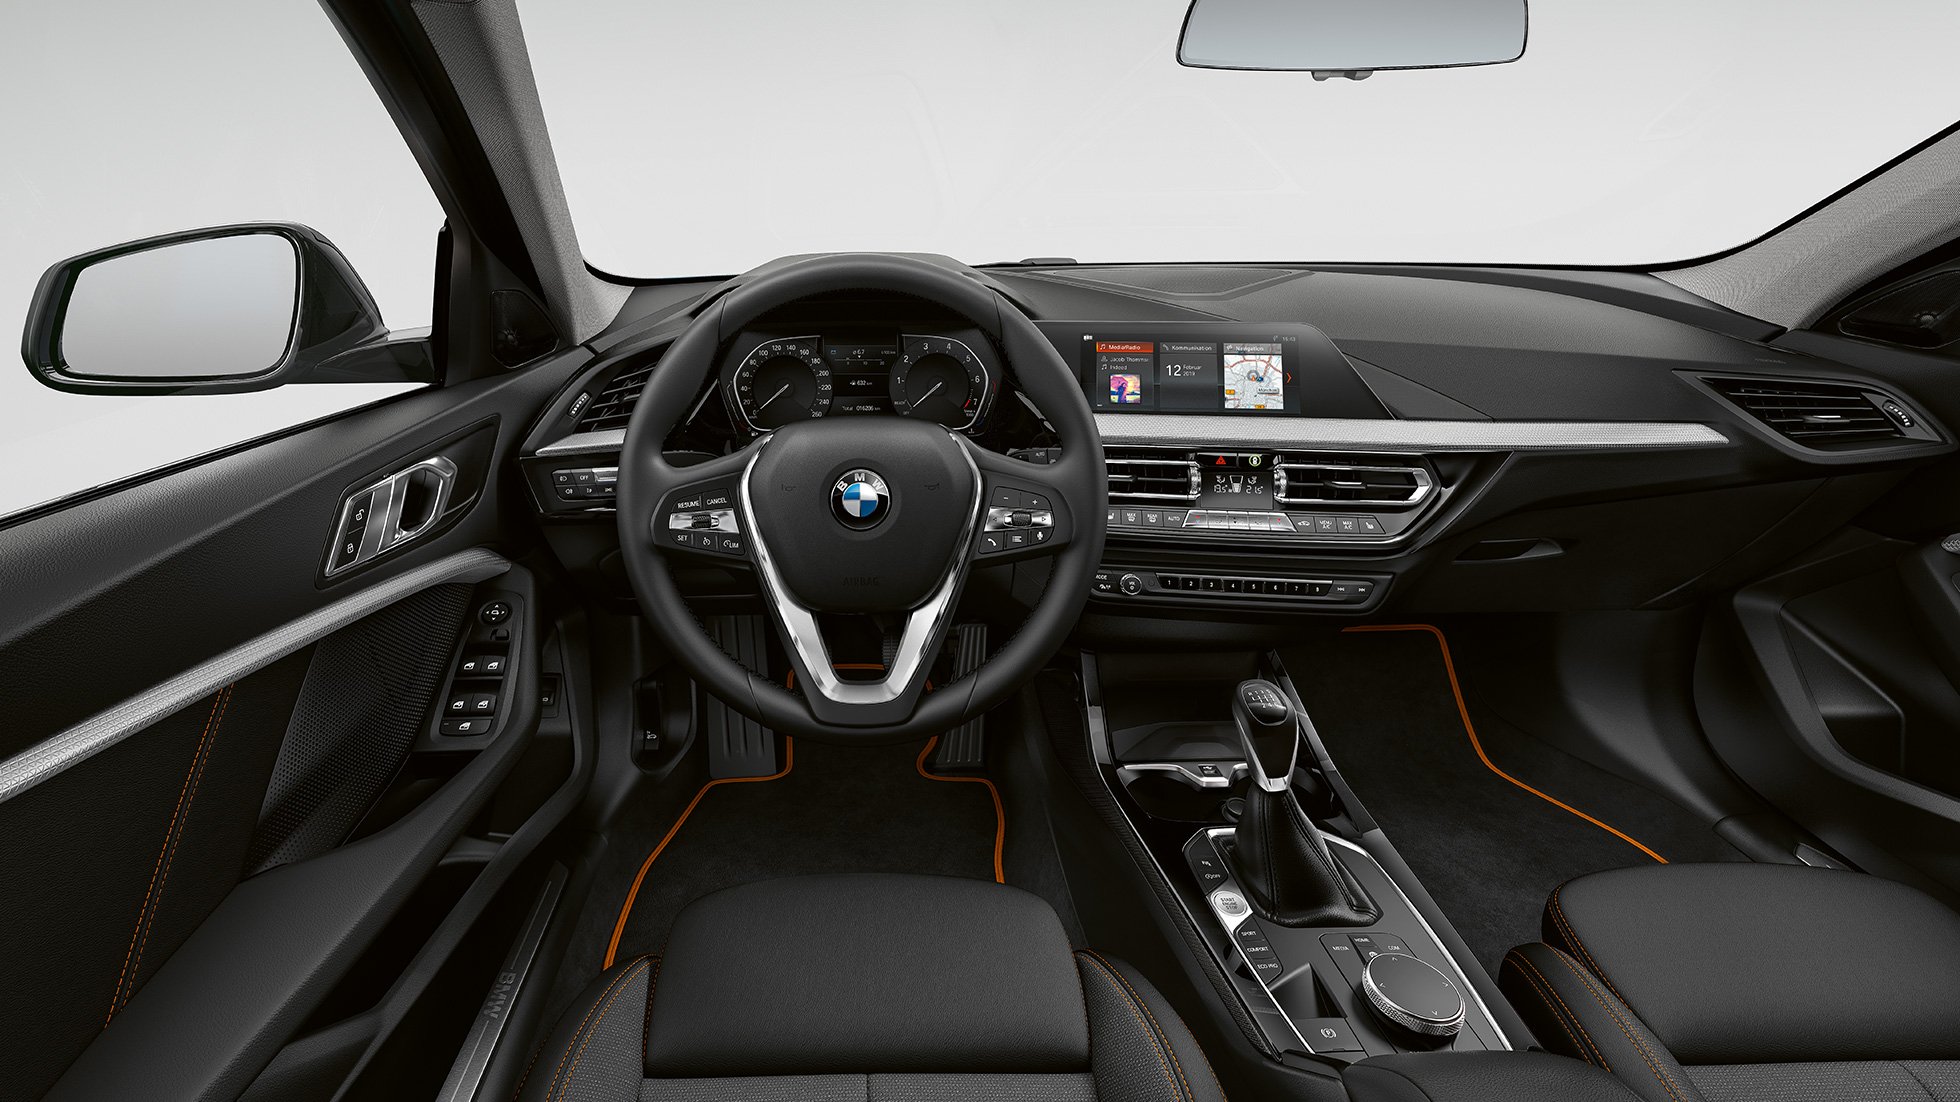 BMW 116i interior - Cockpit